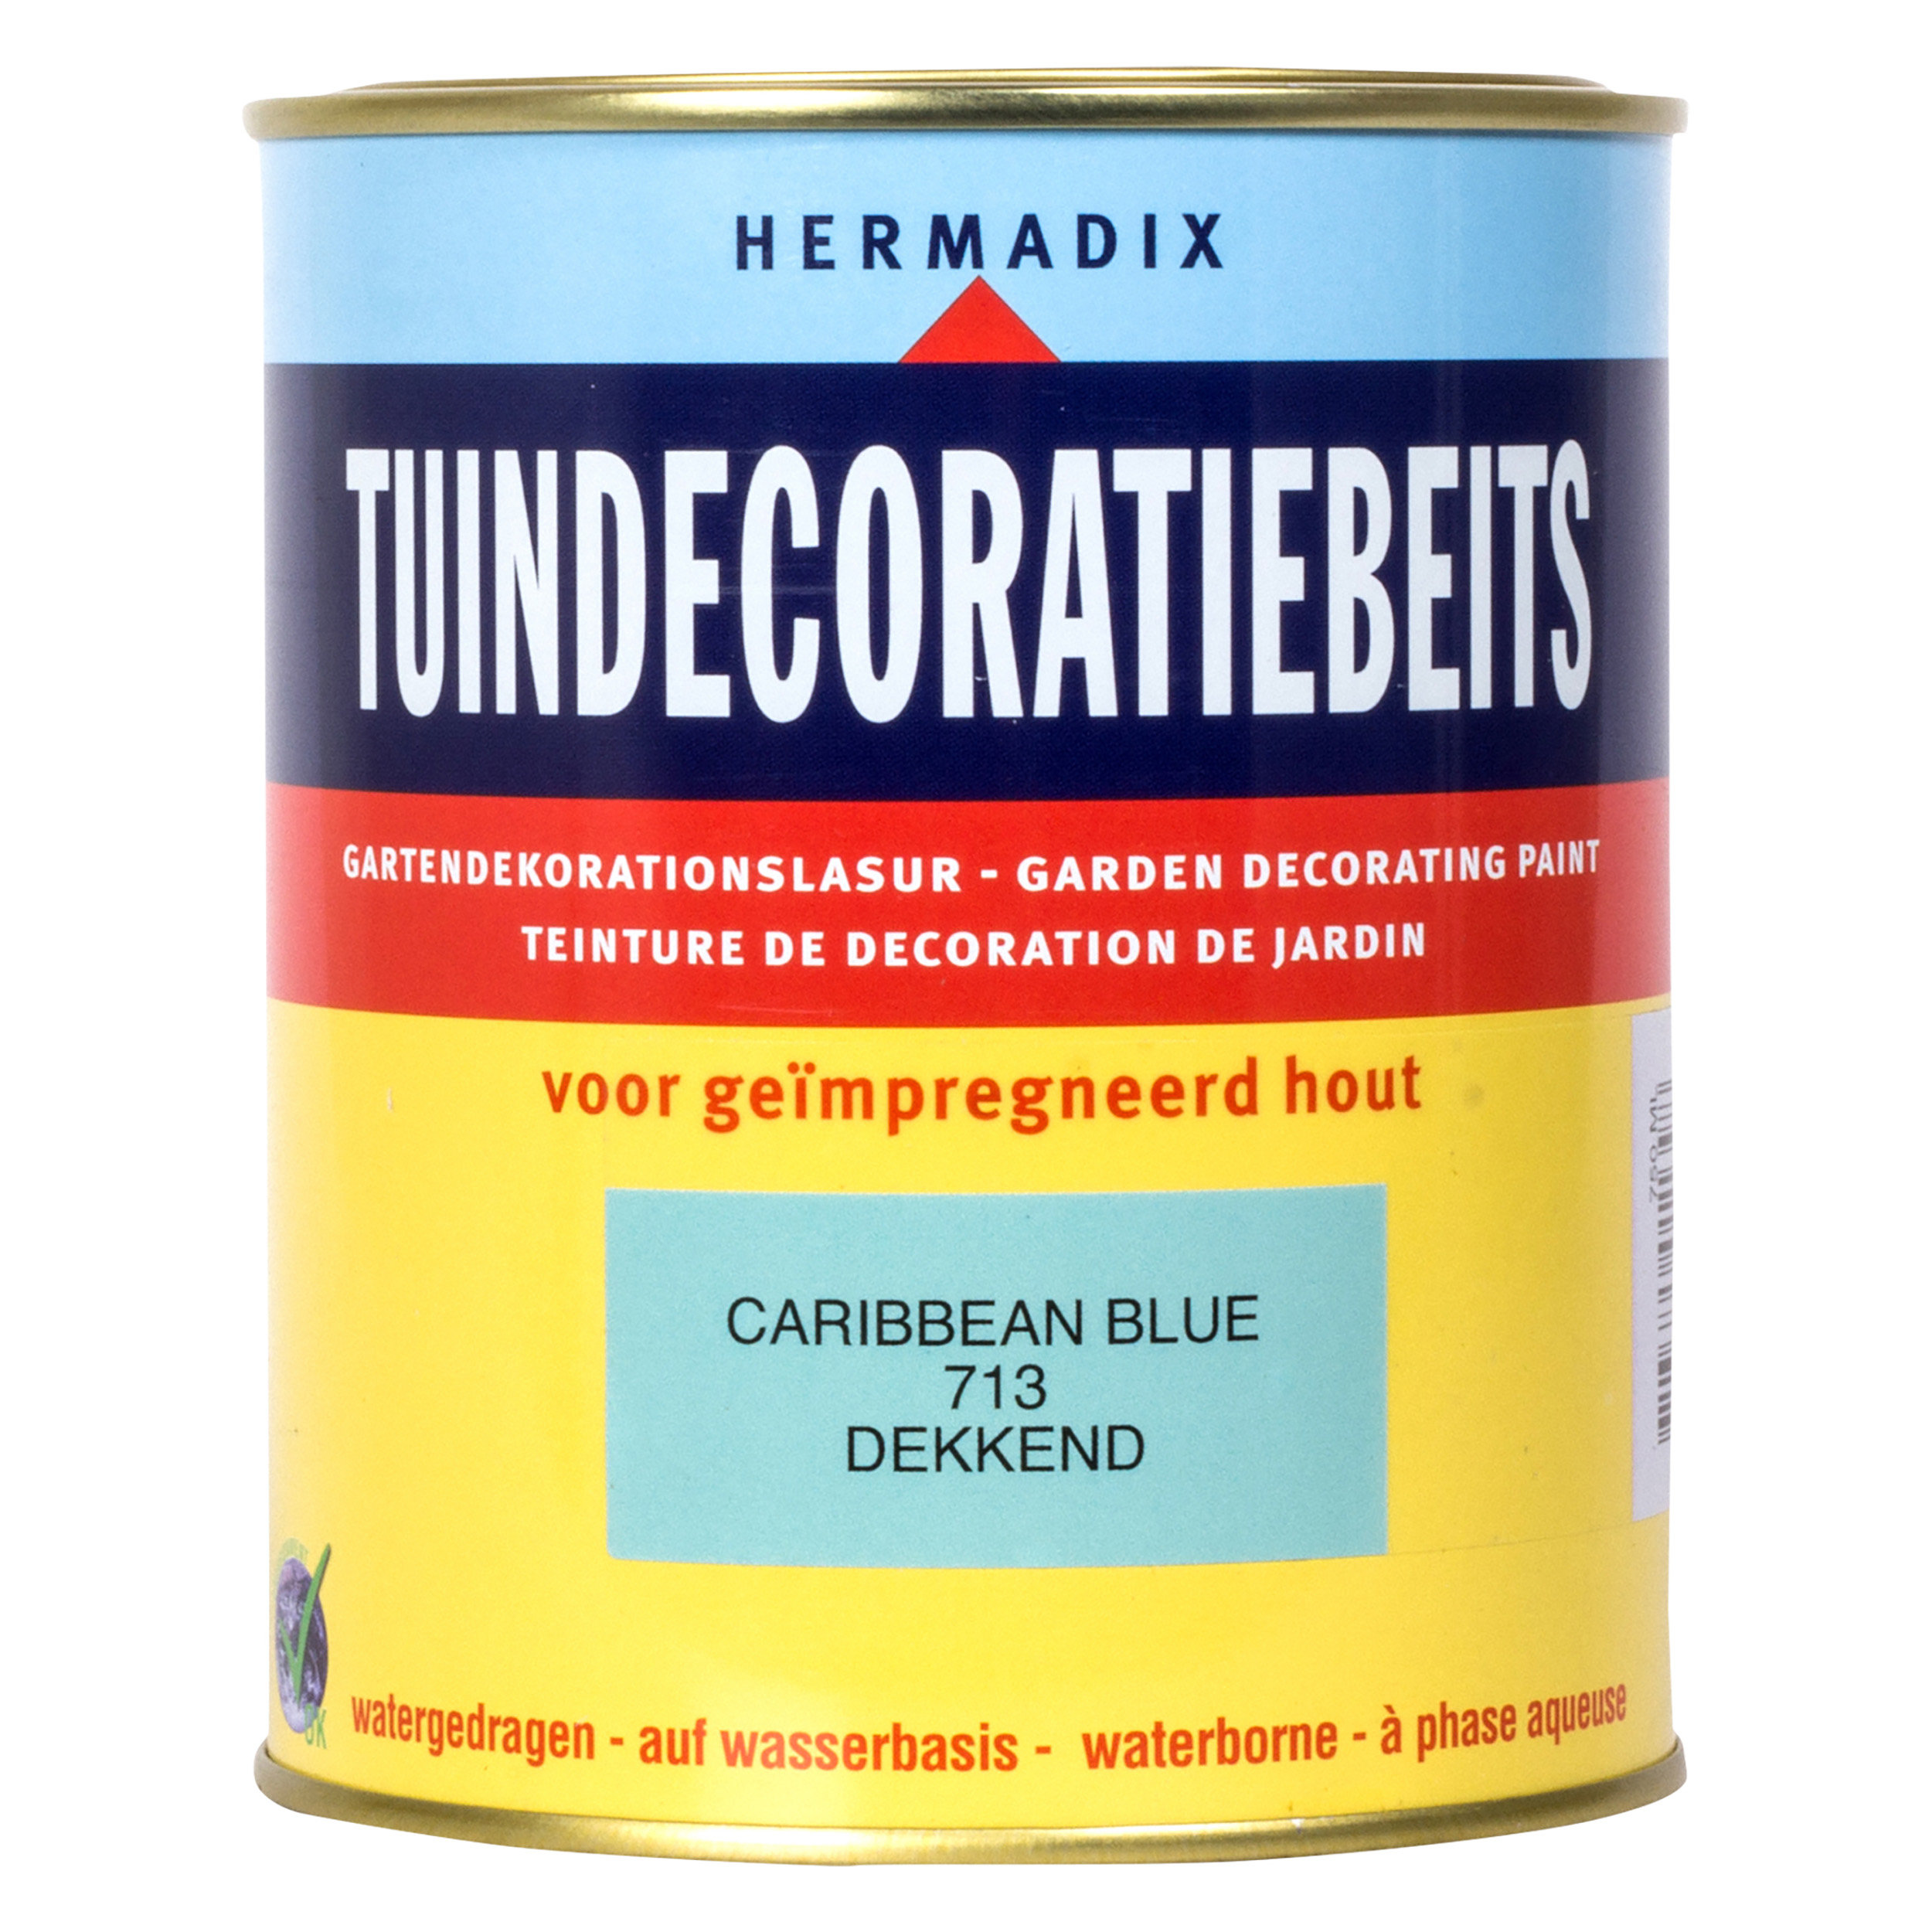 Tuindecoratiebeits caribbean blue